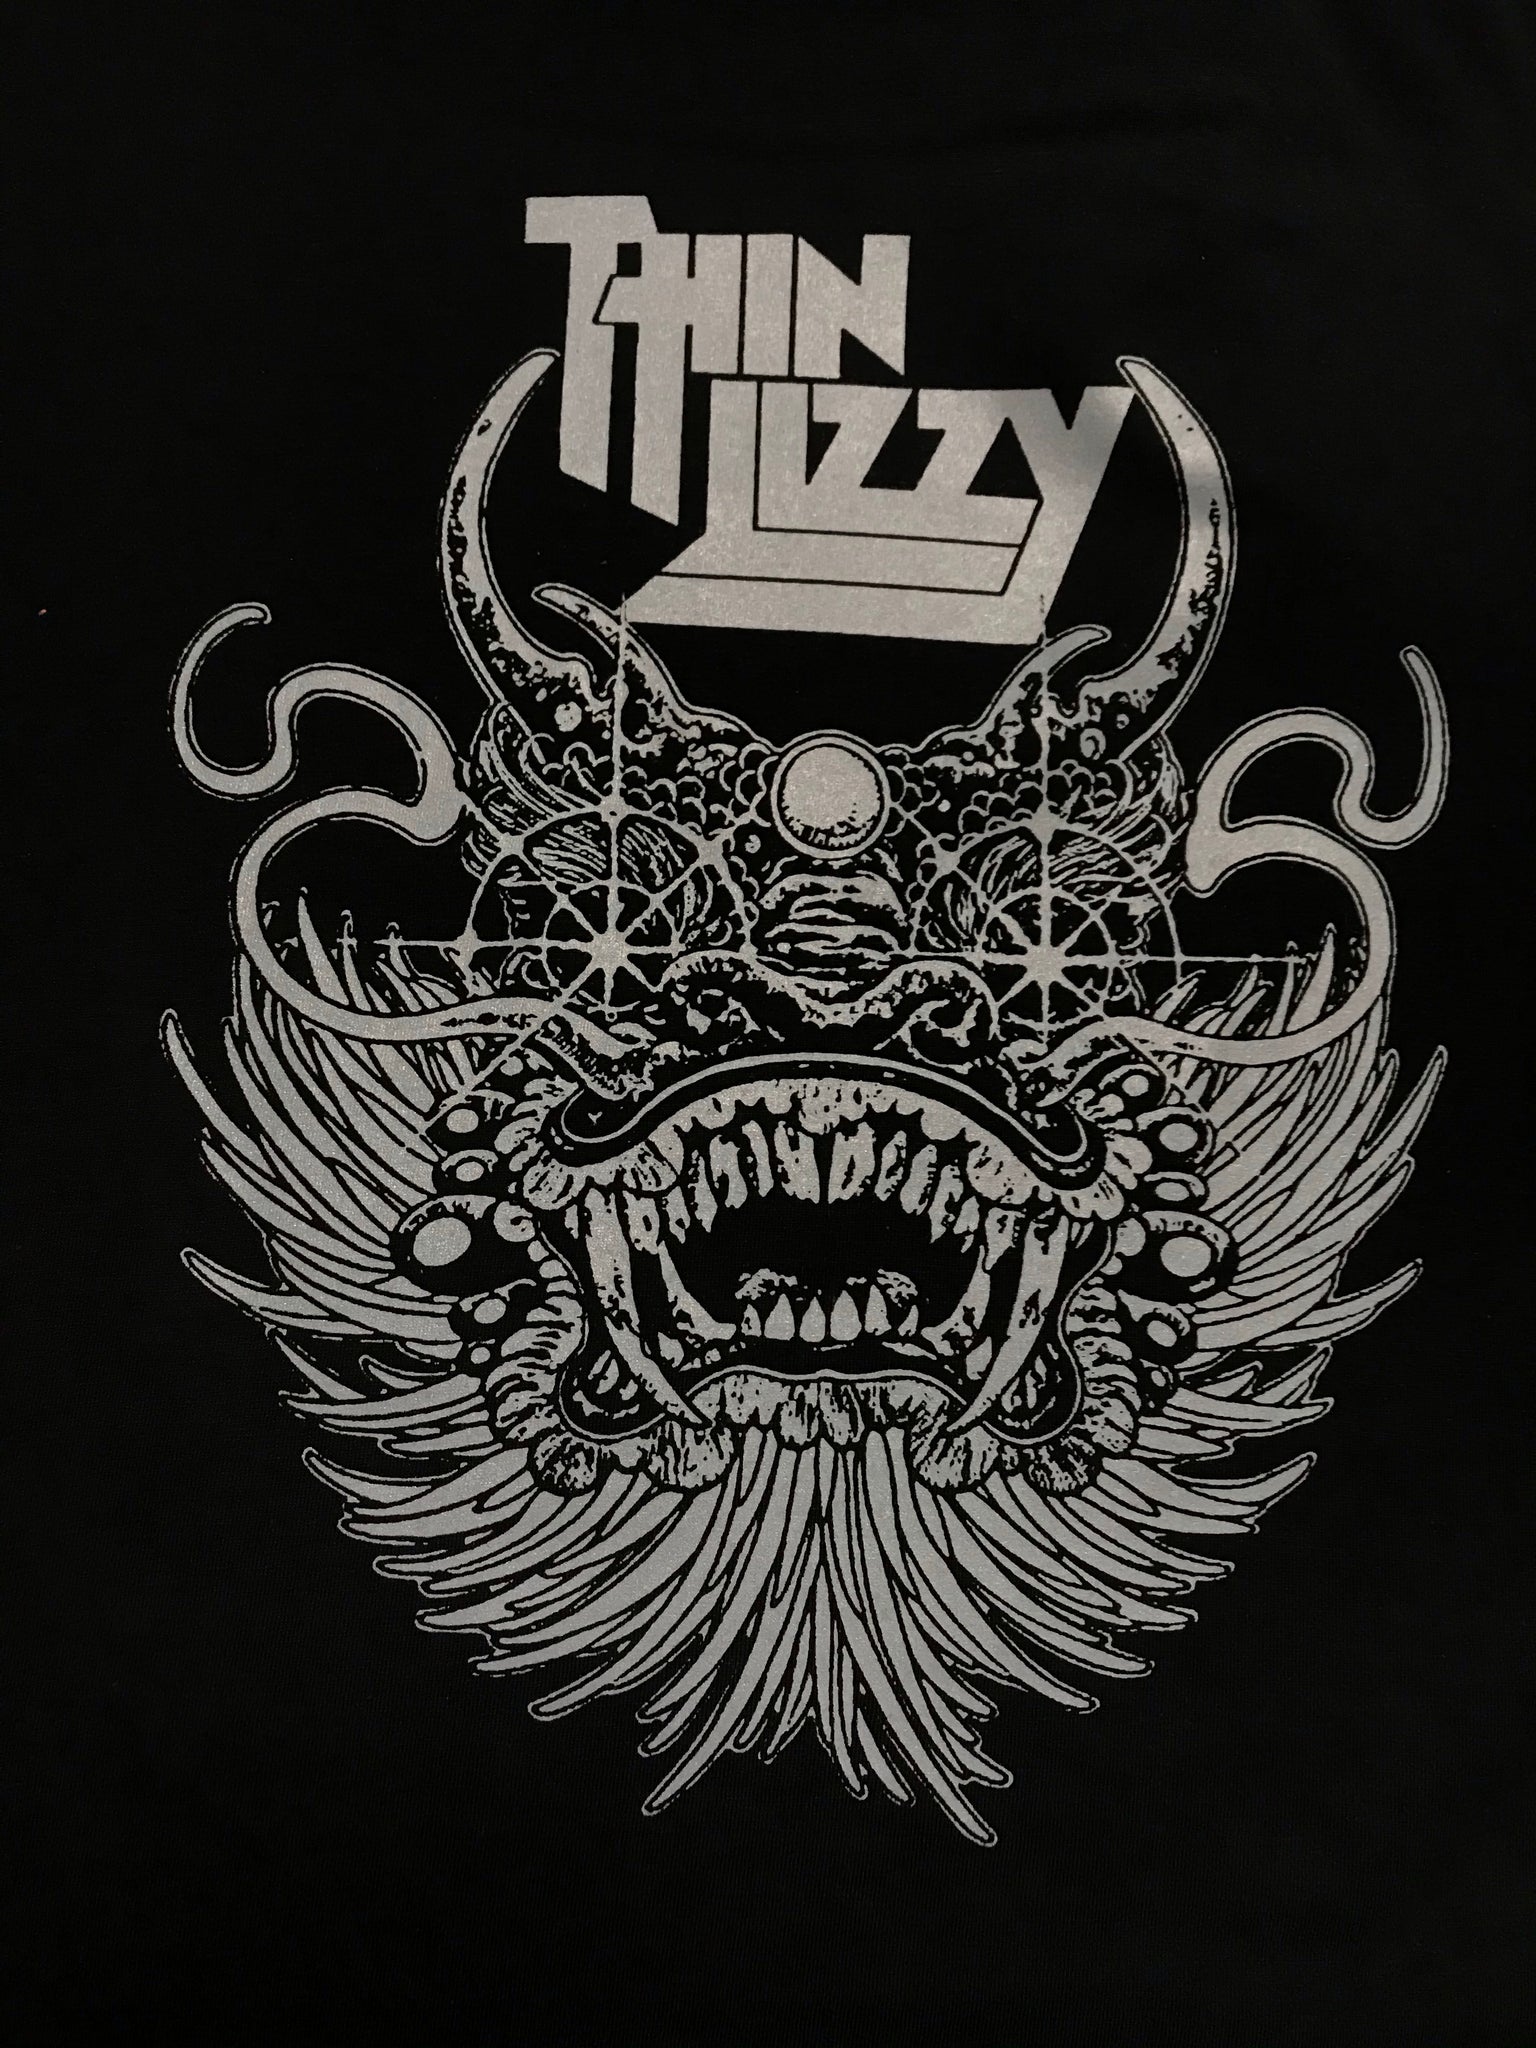 Thin Lizzy (Gray Ink on Black) - Shirt